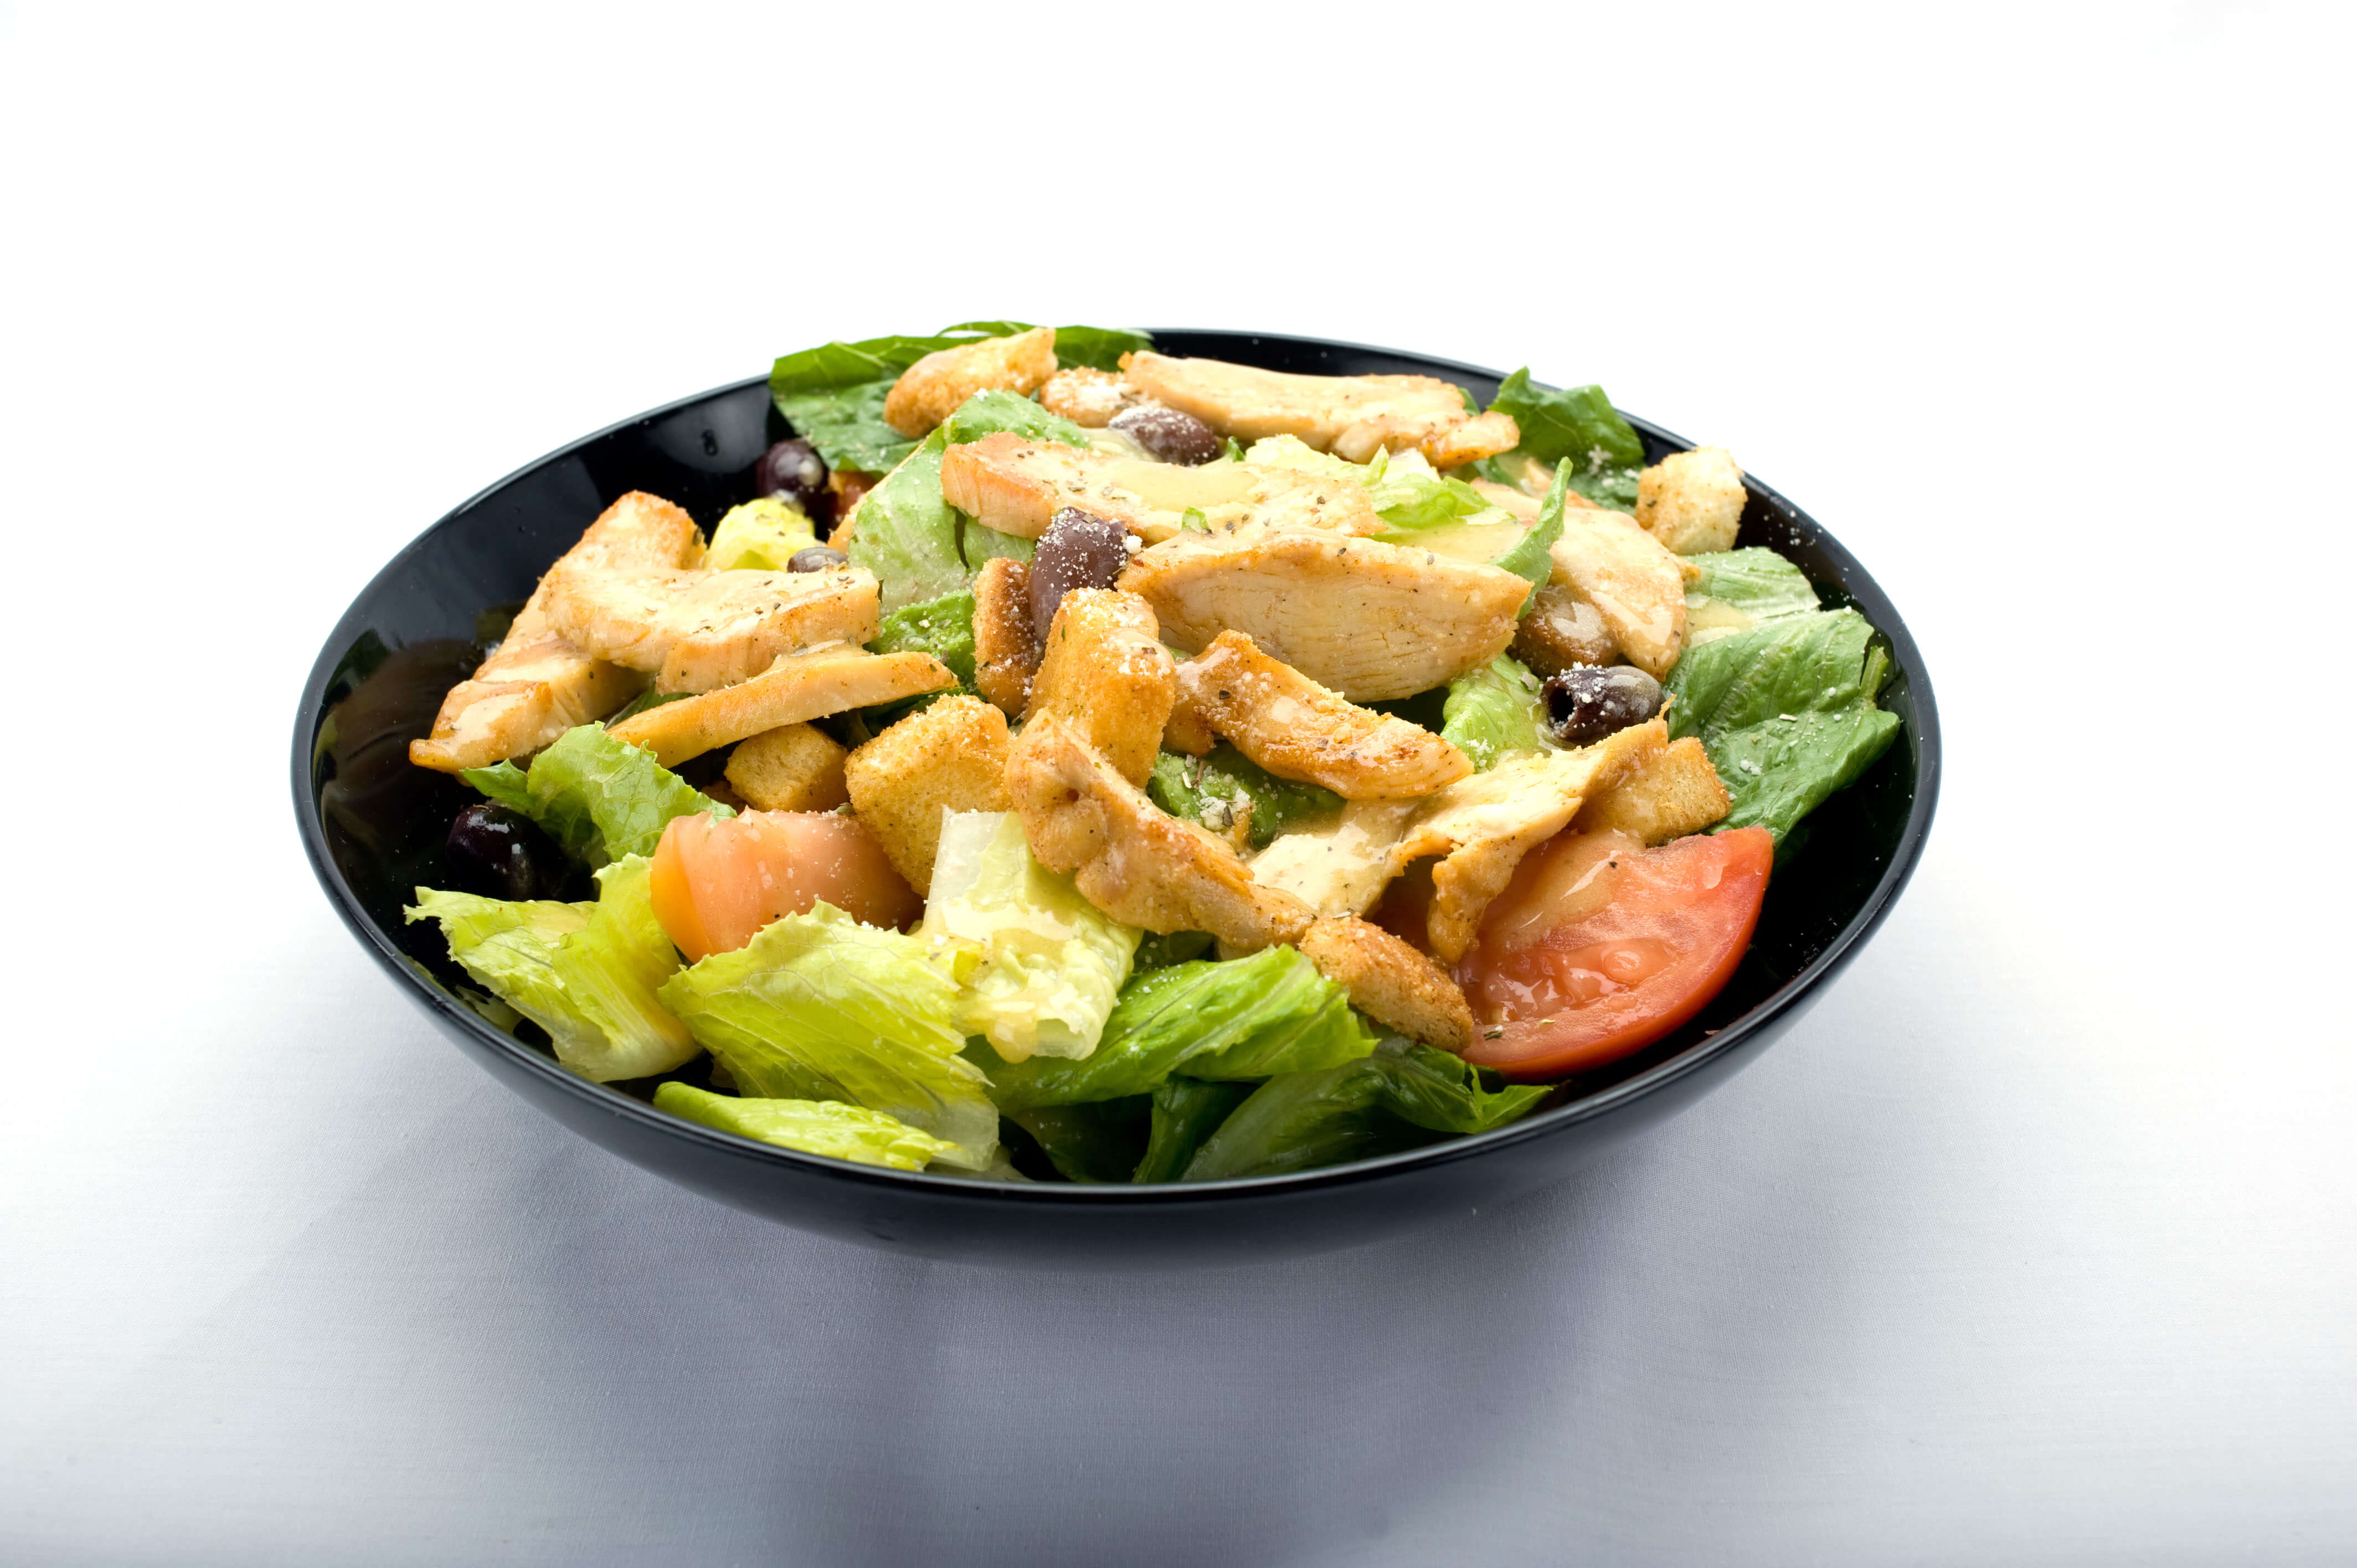 Chicken Caesar Salad from Genova's To Go: Fresh greens, grilled chicken, and creamy Caesar dressing.